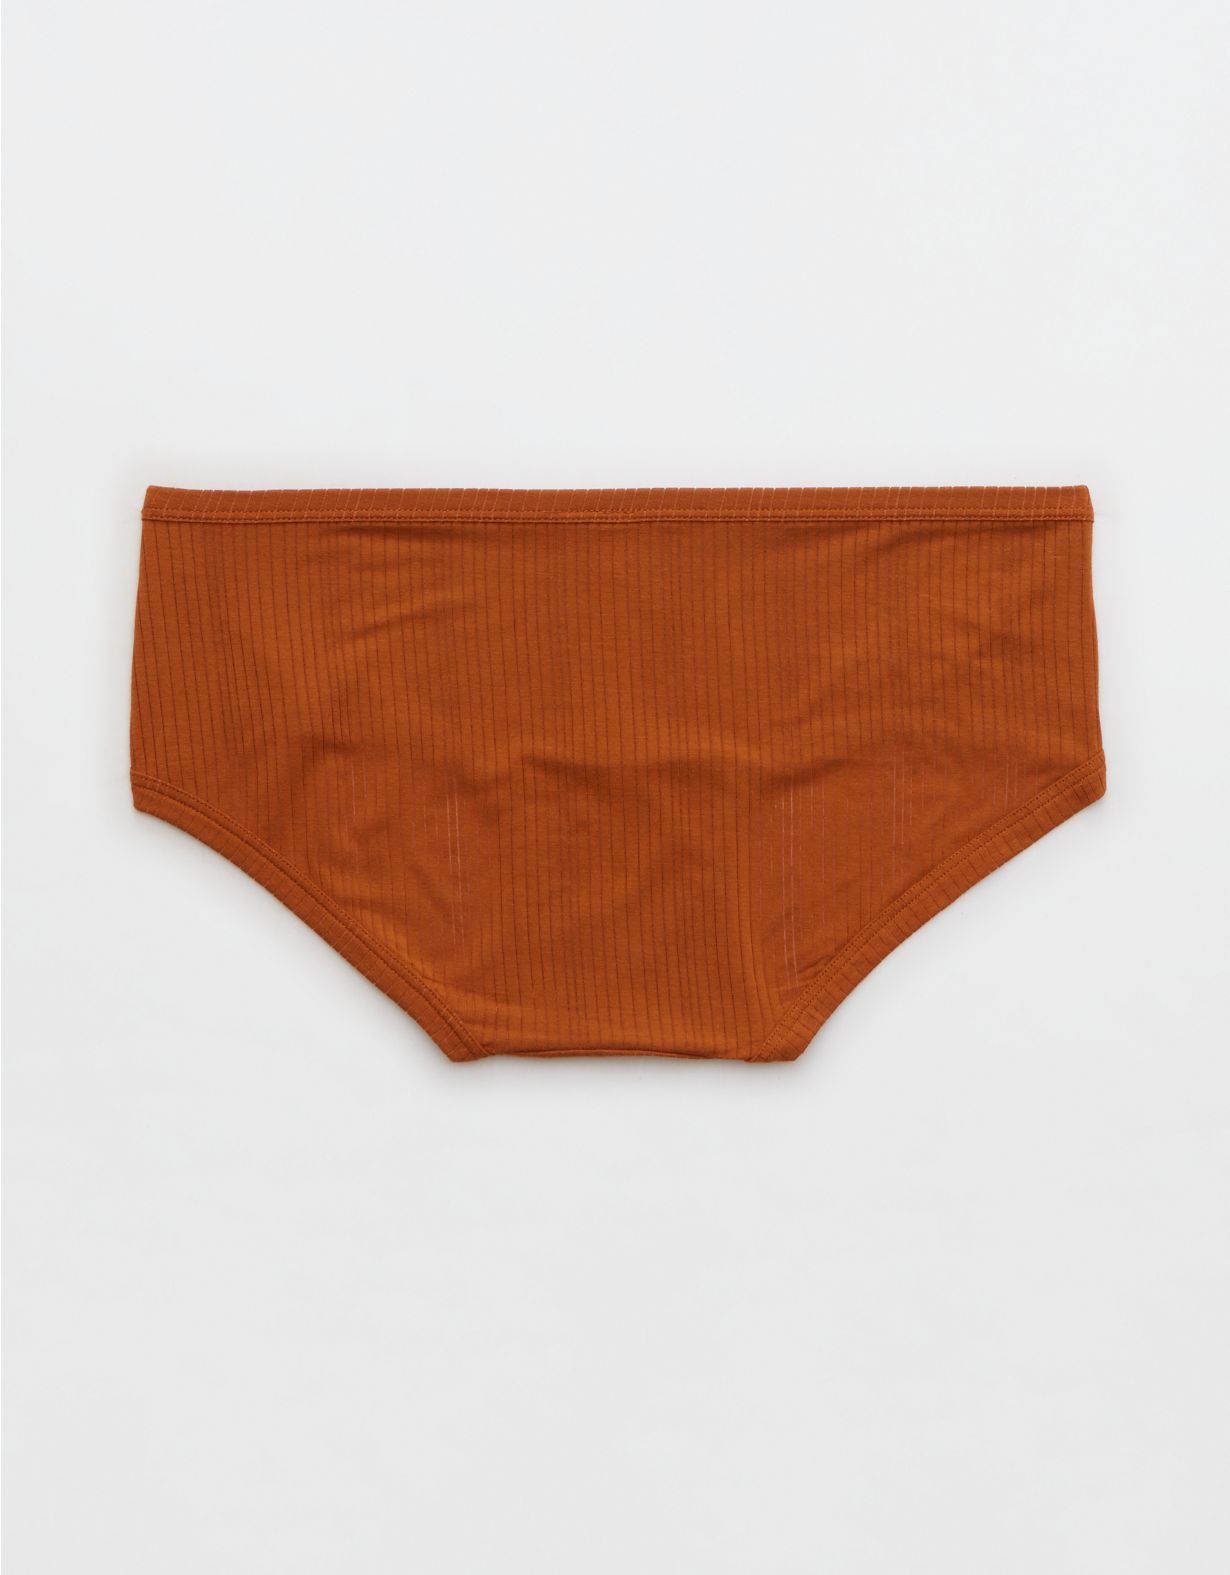 Superchill Modal Ribbed Boybrief Underwear